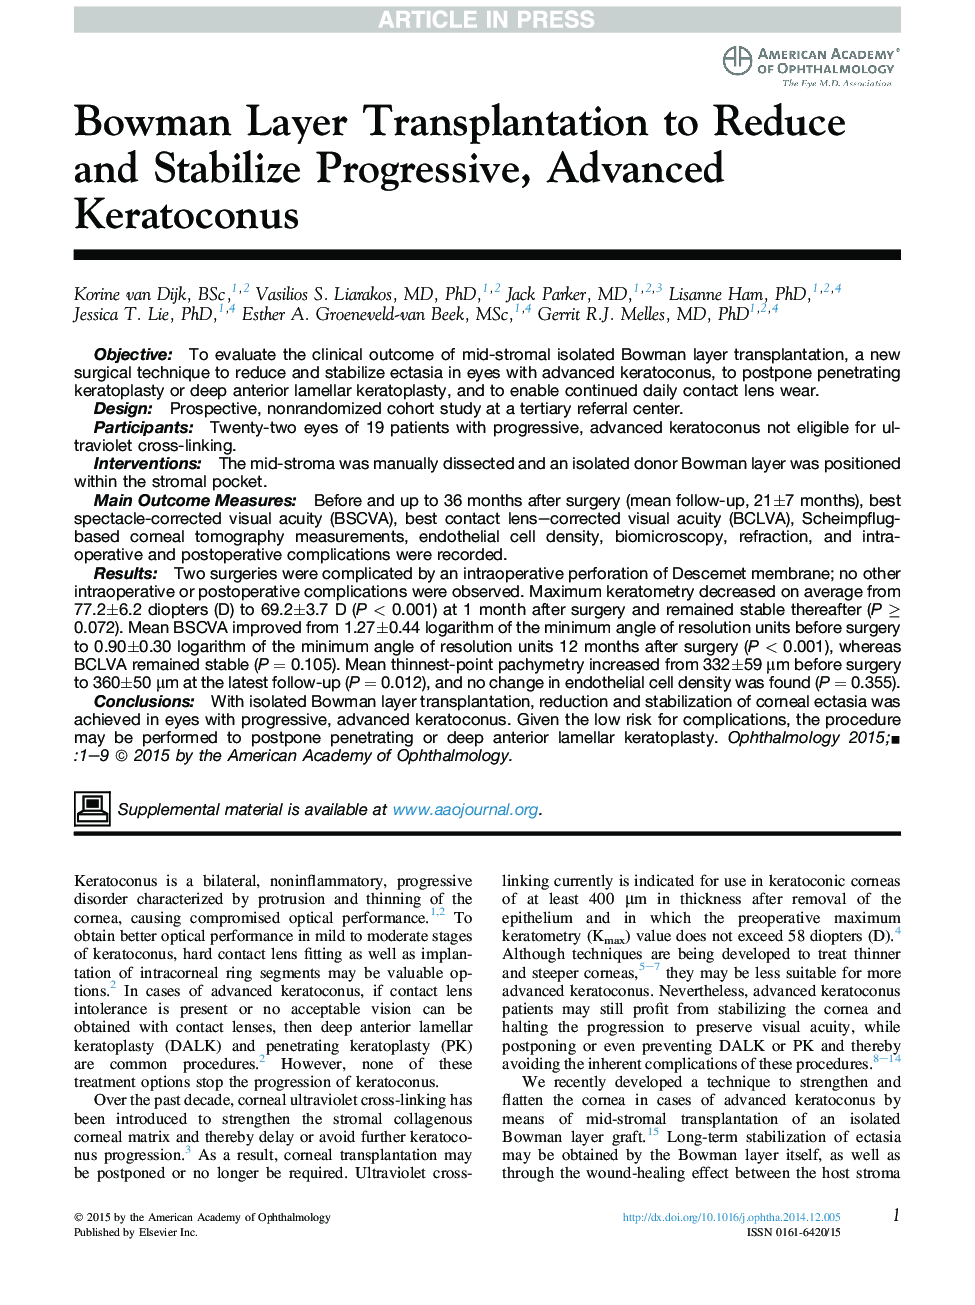 Bowman Layer Transplantation to Reduce and Stabilize Progressive, Advanced Keratoconus